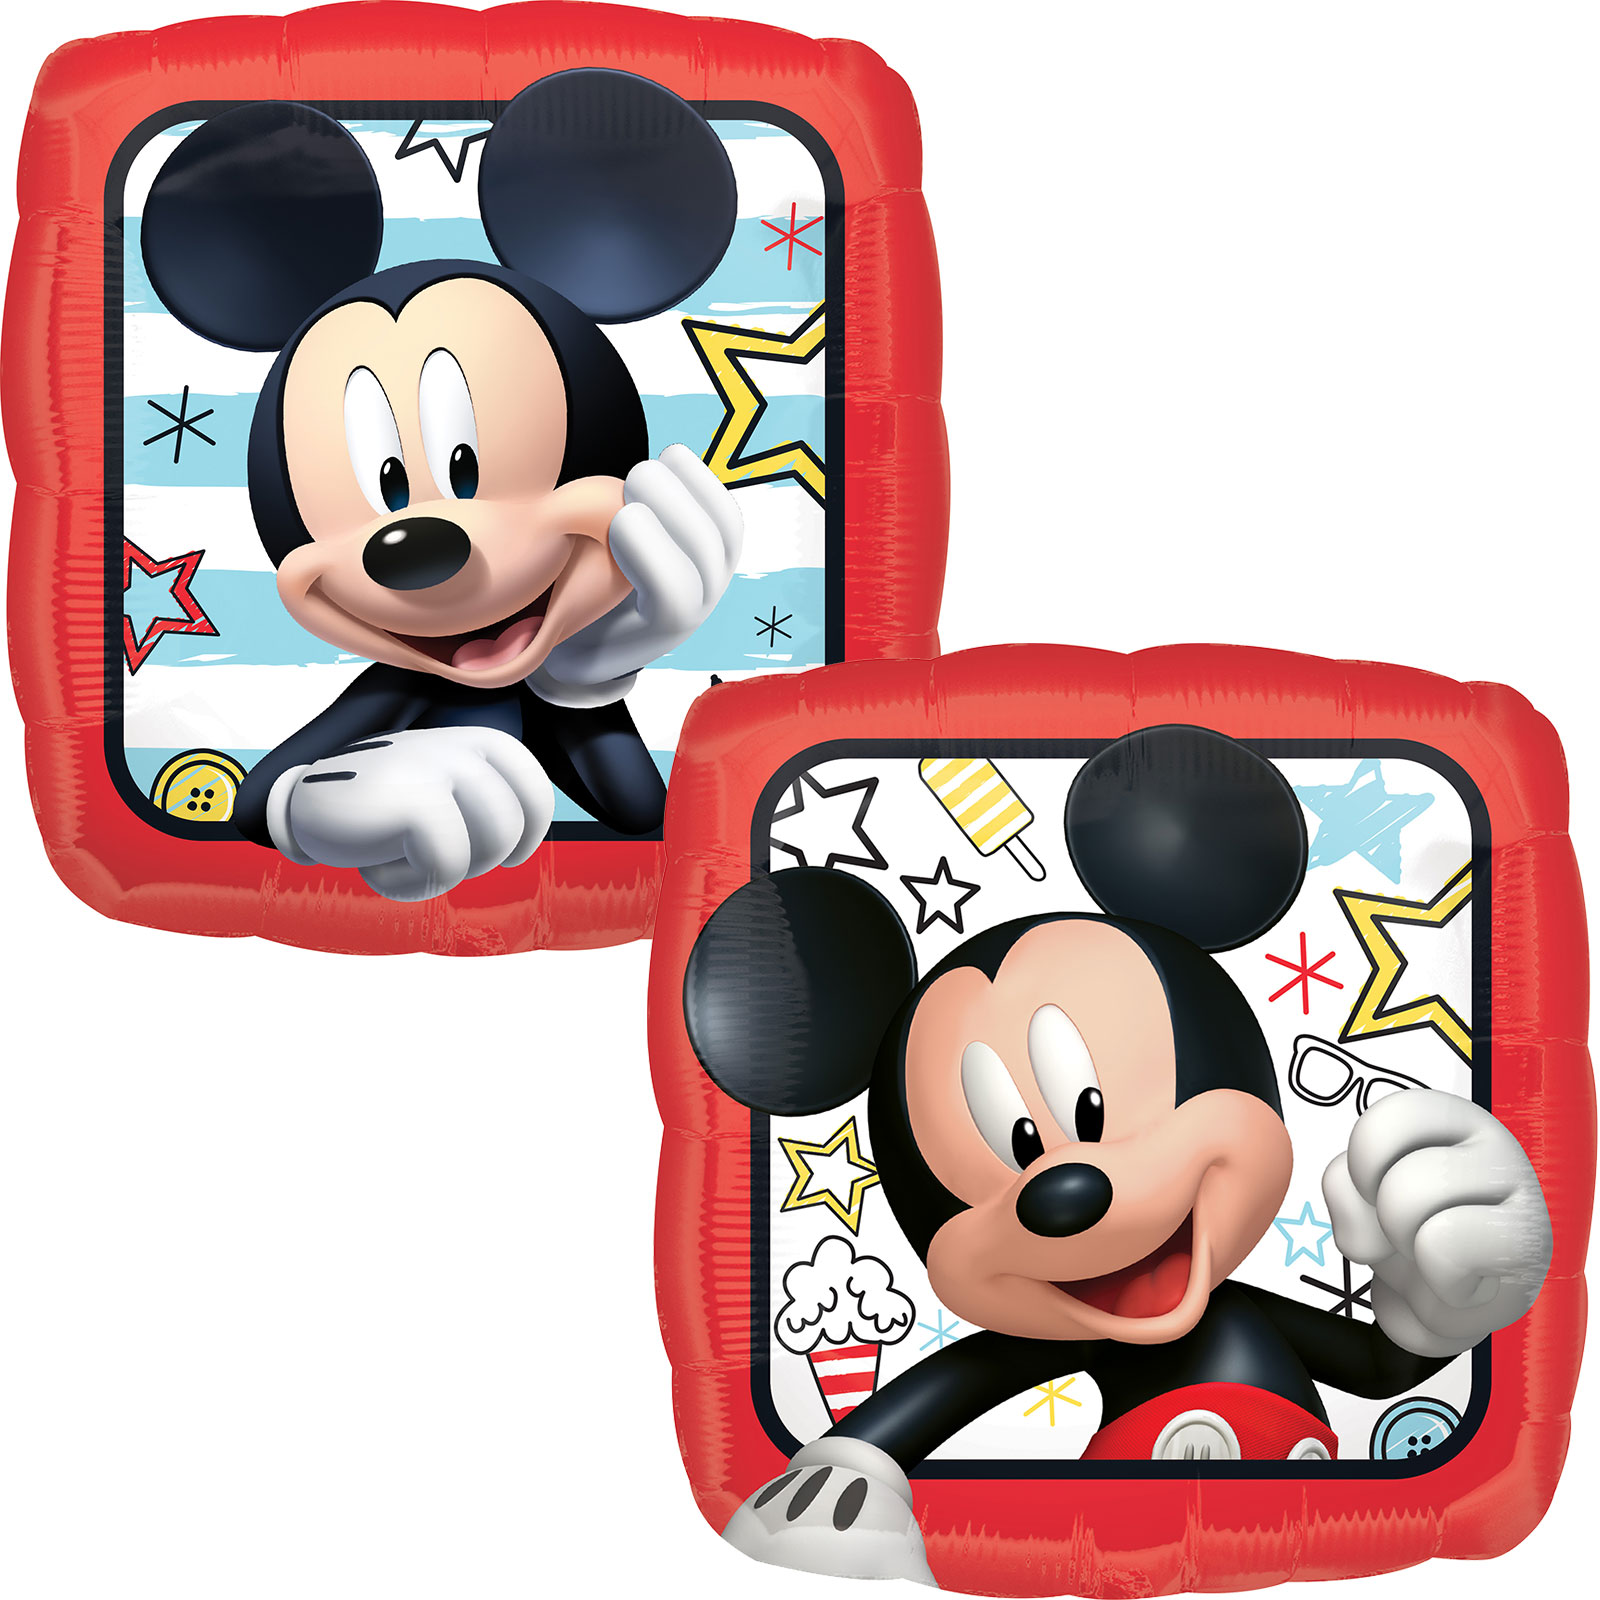 Mickey Mouse 2-sided designed Mylar